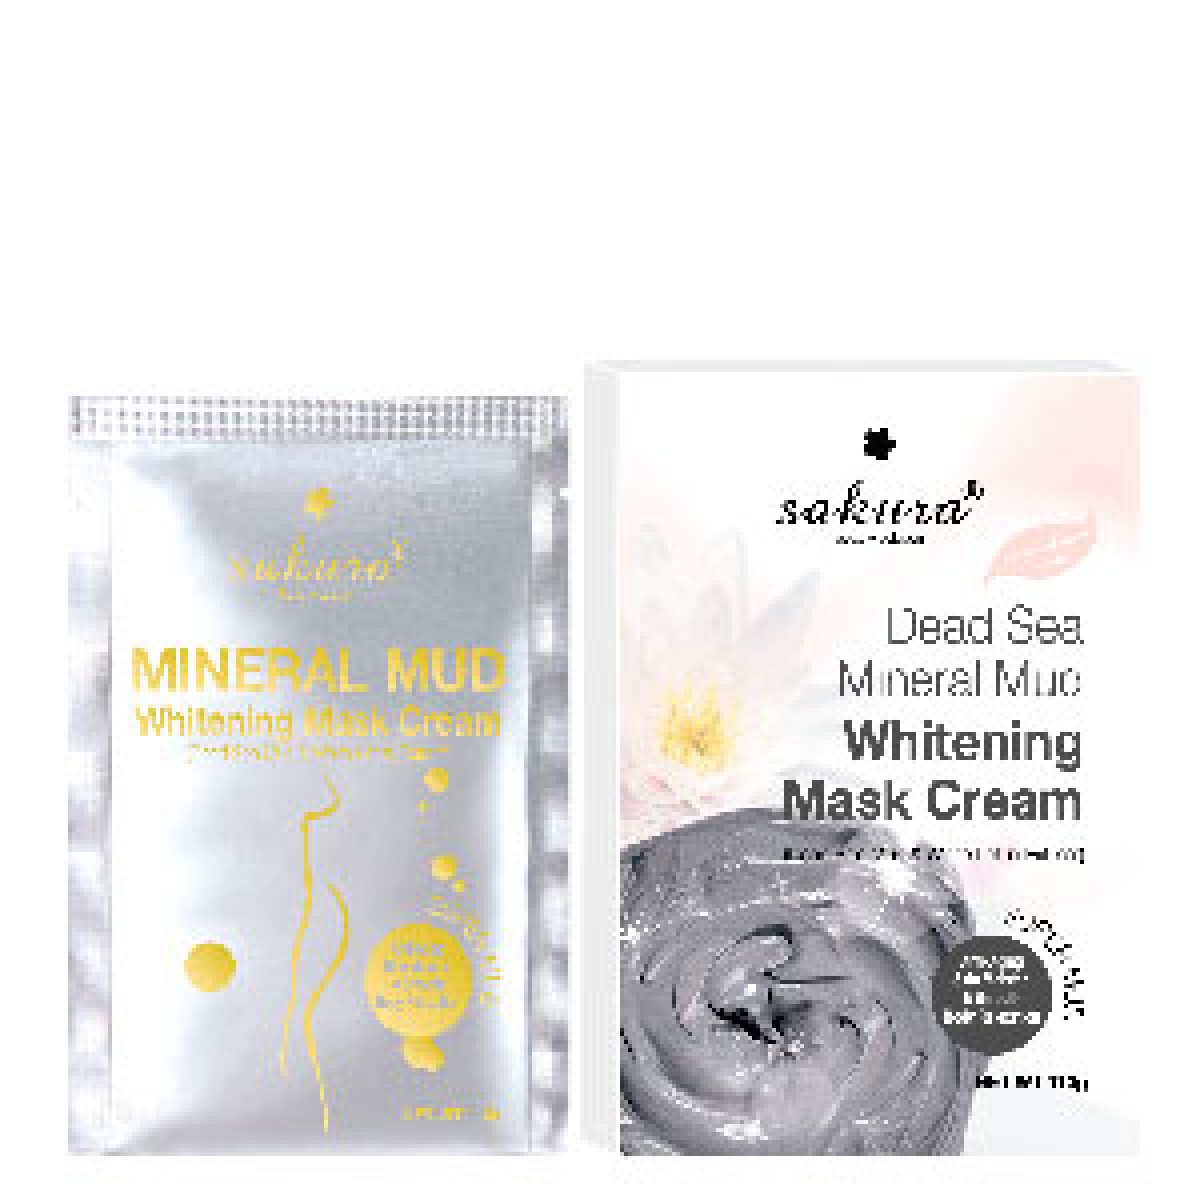 Dead sea mineral mud whitening mask cream